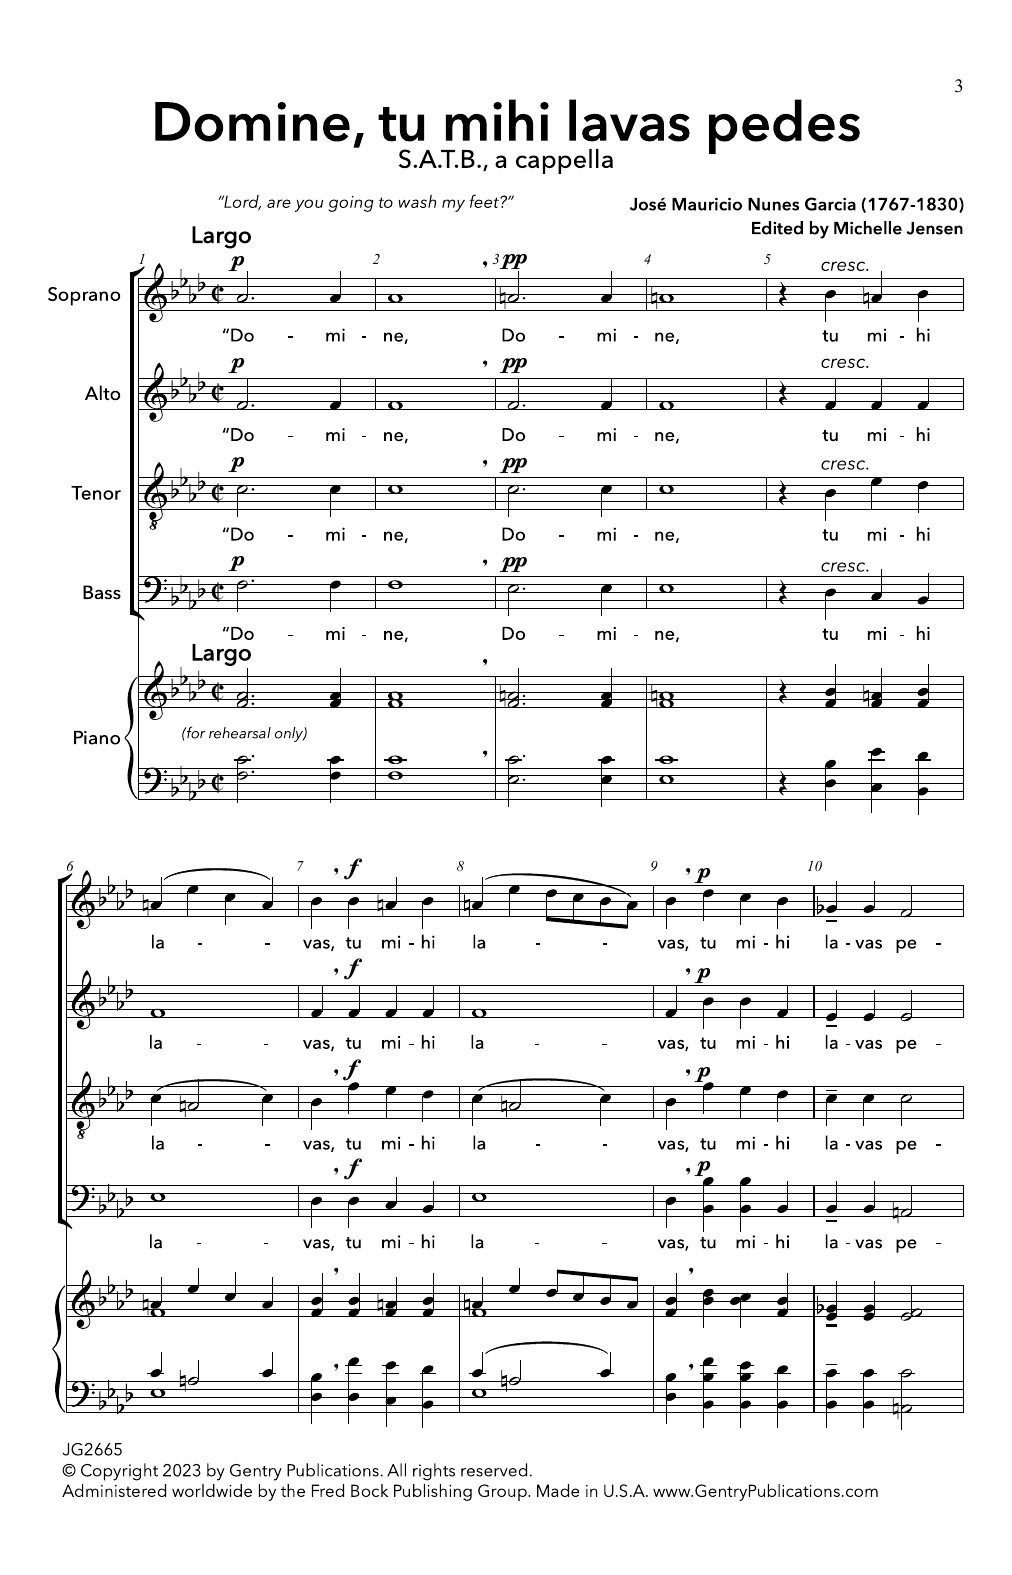 Download José Mauricio Nunes Garcia Domini Tu Mihi Lavas Pedes Sheet Music and learn how to play SATB Choir PDF digital score in minutes